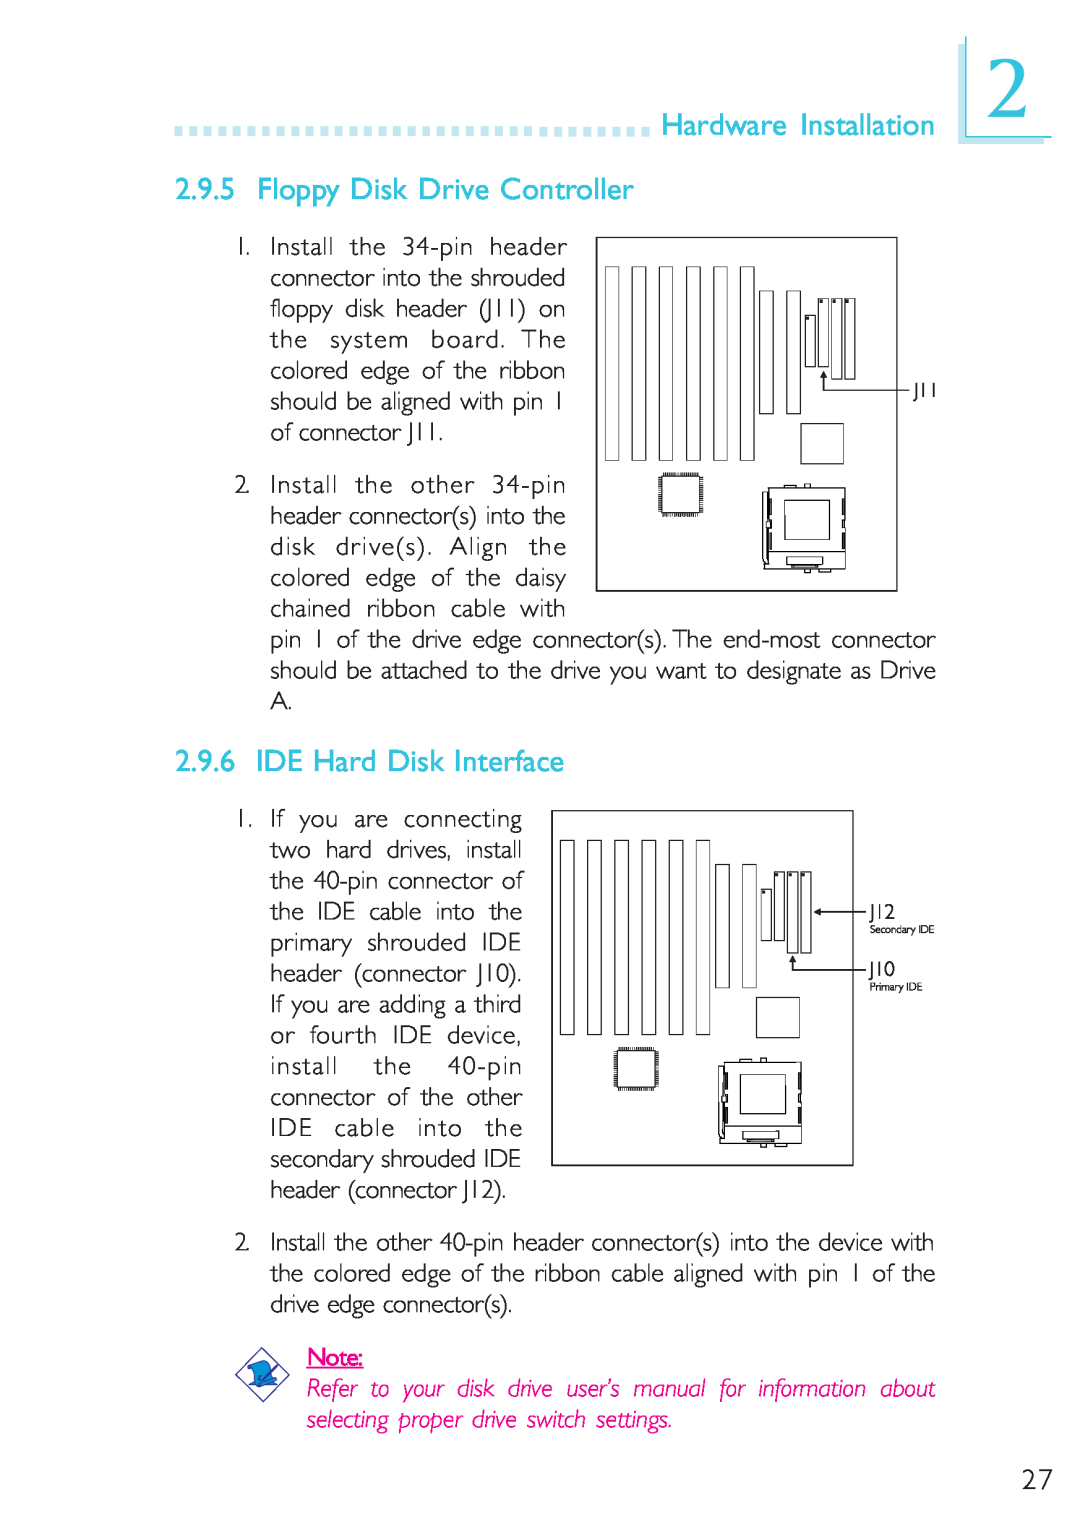 Microsoft G7VP2 manual Hardware Installation 2.9.5 Floppy Disk Drive Controller, IDE Hard Disk Interface 